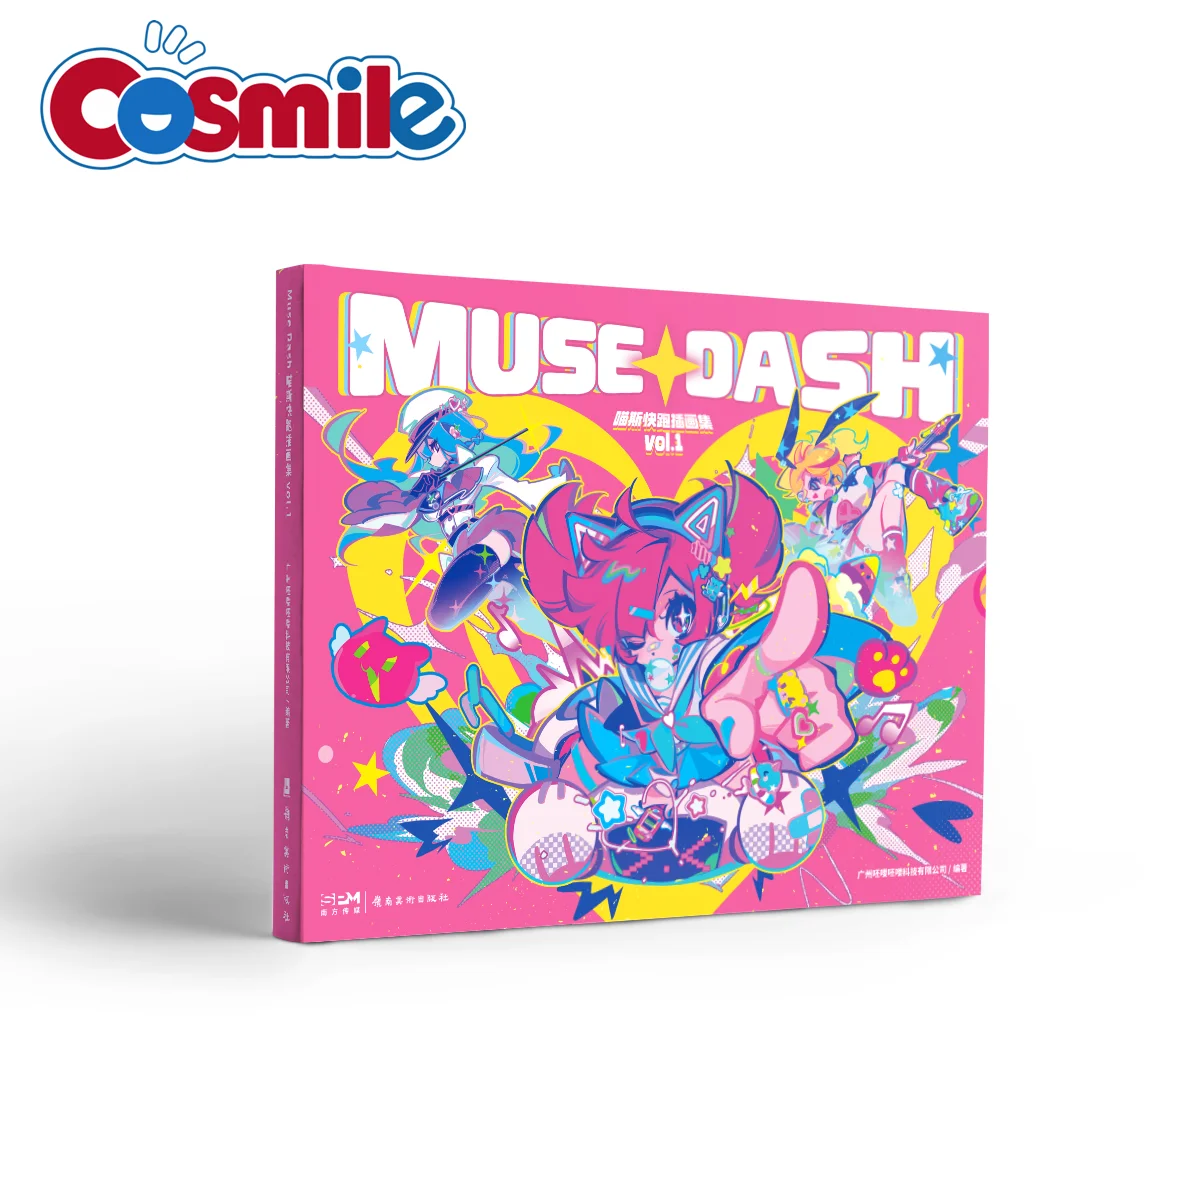 

Cosmile Muse Dash Musedash Rin Buro Marija Illustration Collection Picture Album Art Book Cosplay Game Peropero C